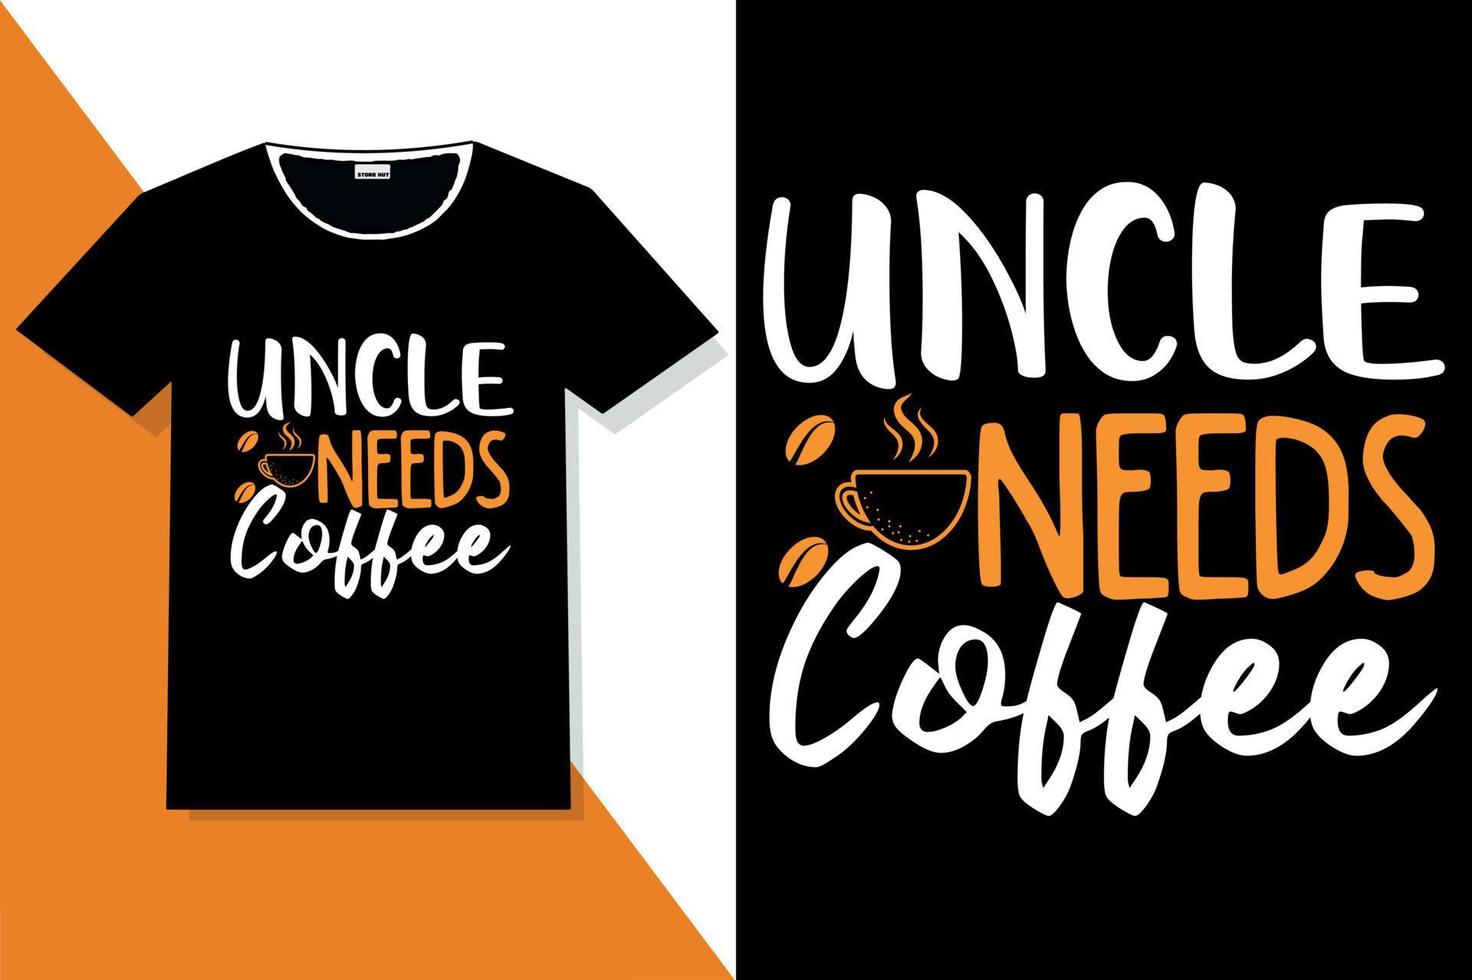 coffee typography t shirt design vector